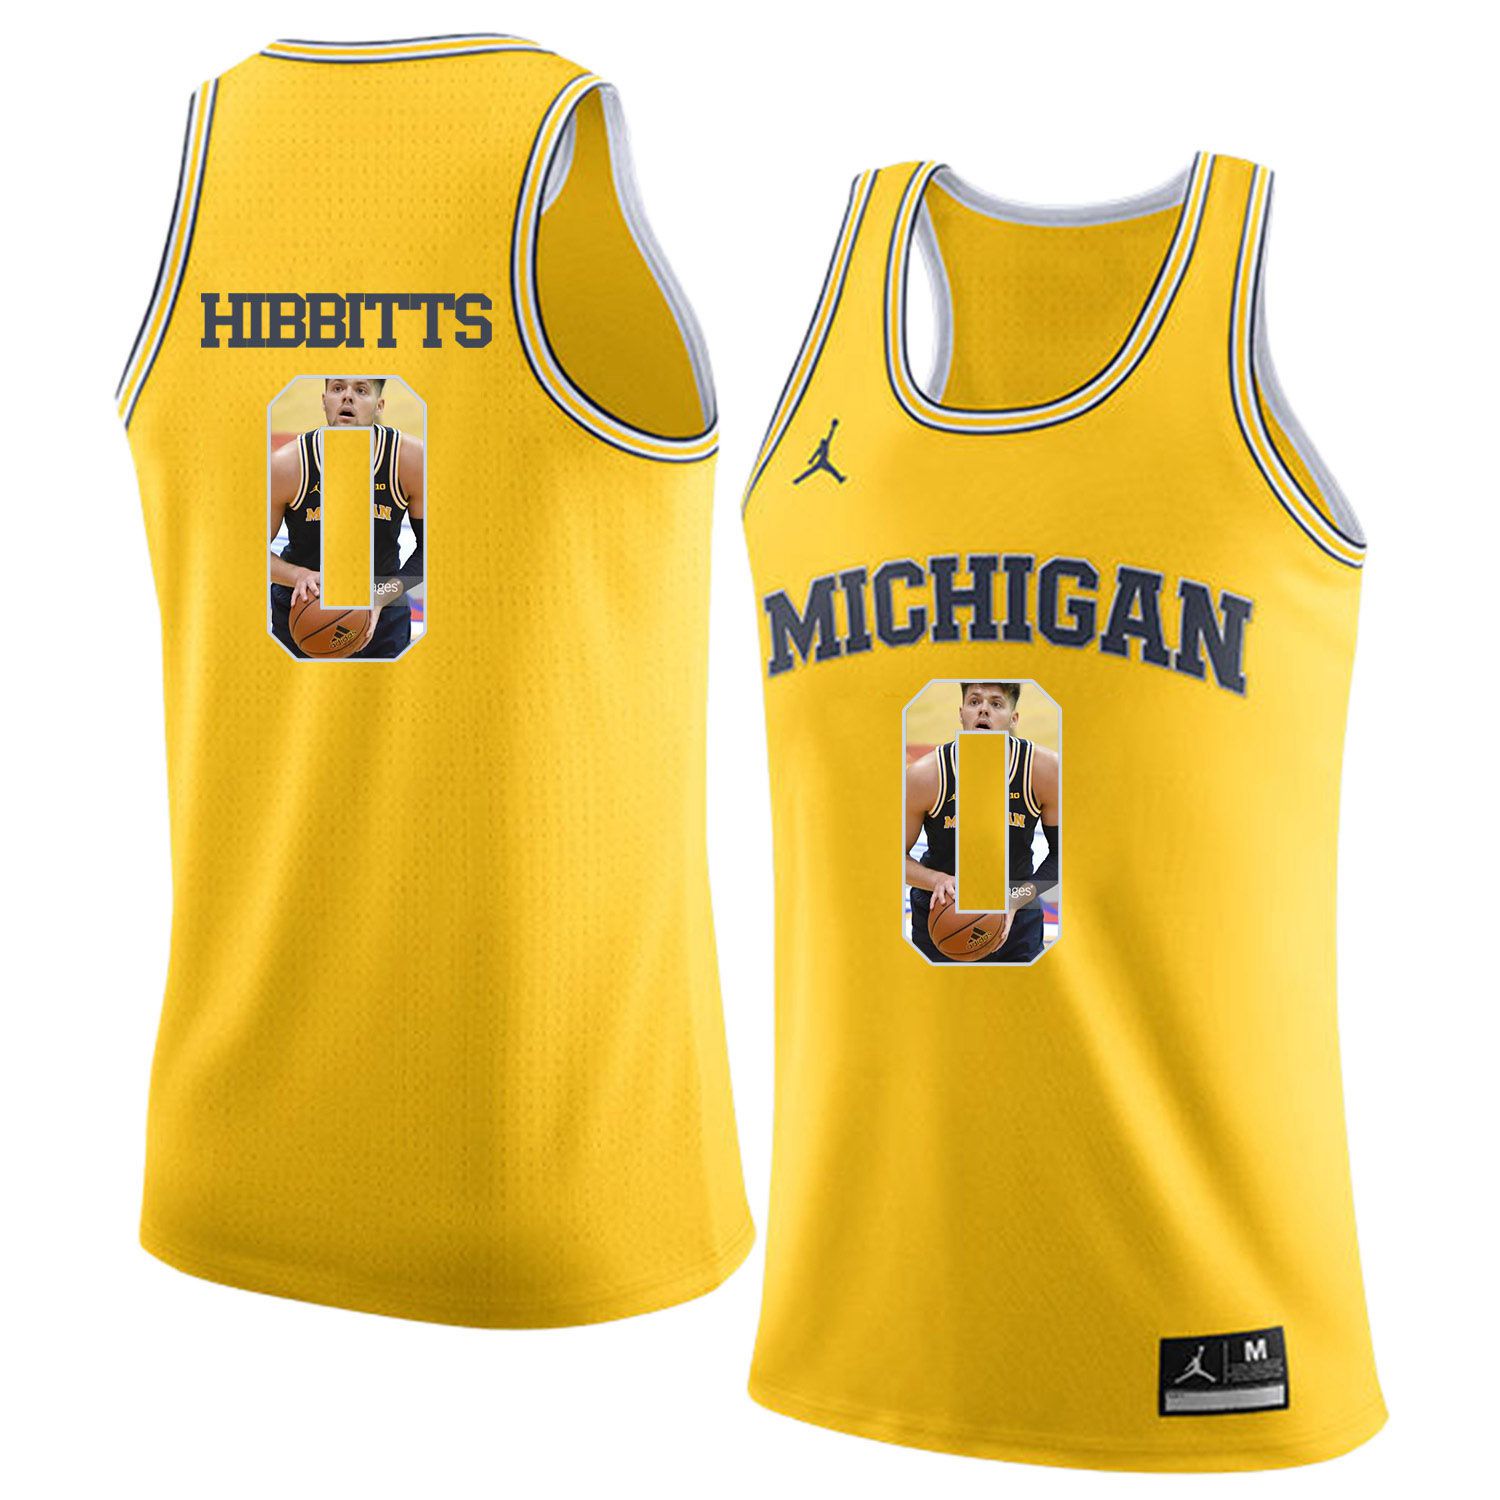 Men Jordan University of Michigan Basketball Yellow 0 Hibbitts Fashion Edition Customized NCAA Jerseys